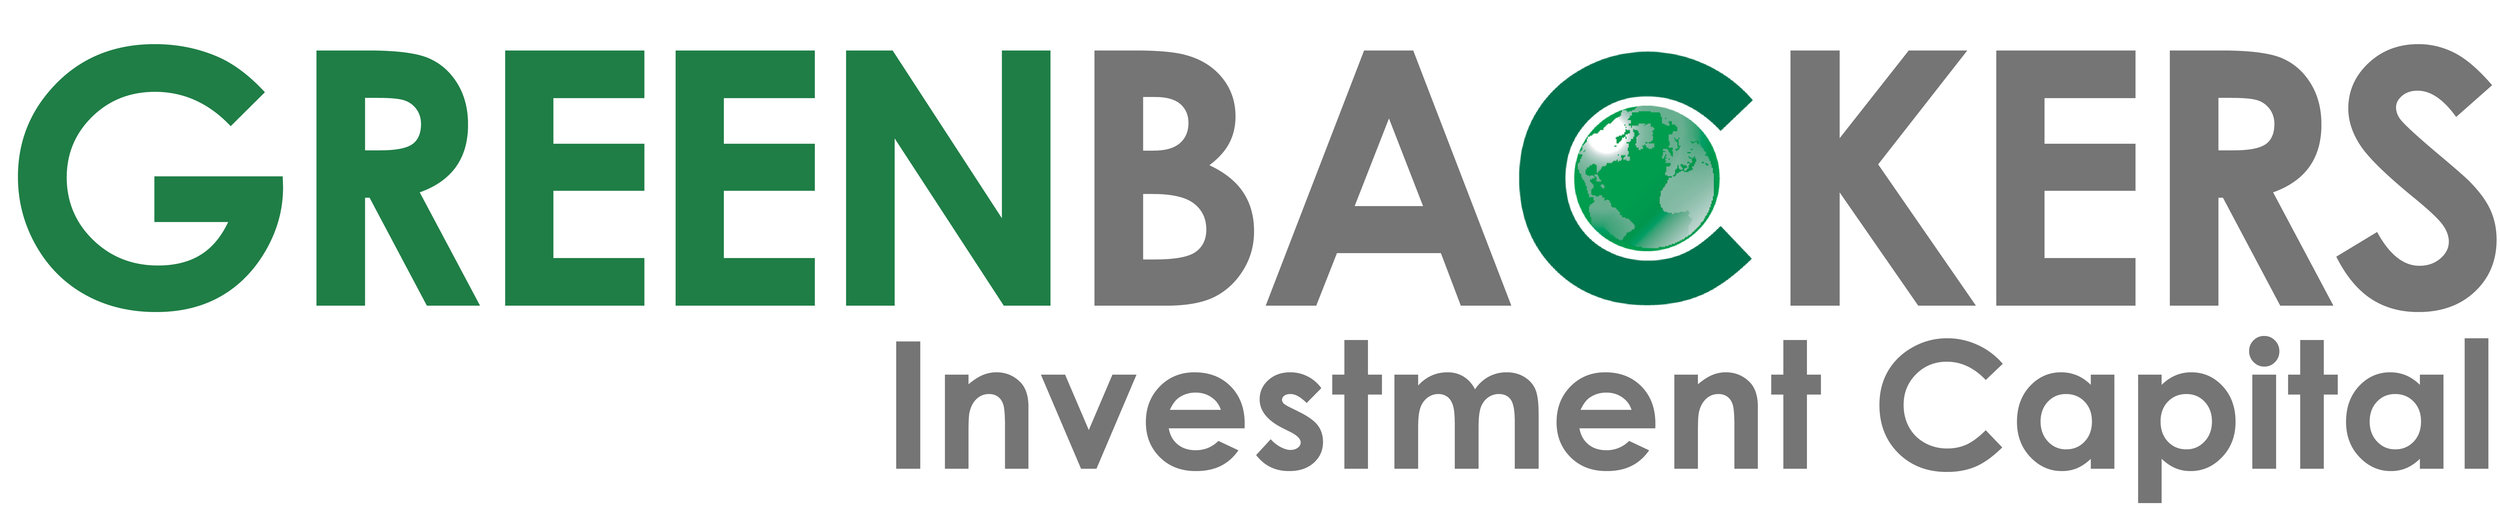 GreenBackers Investment Capital Logo.jpg